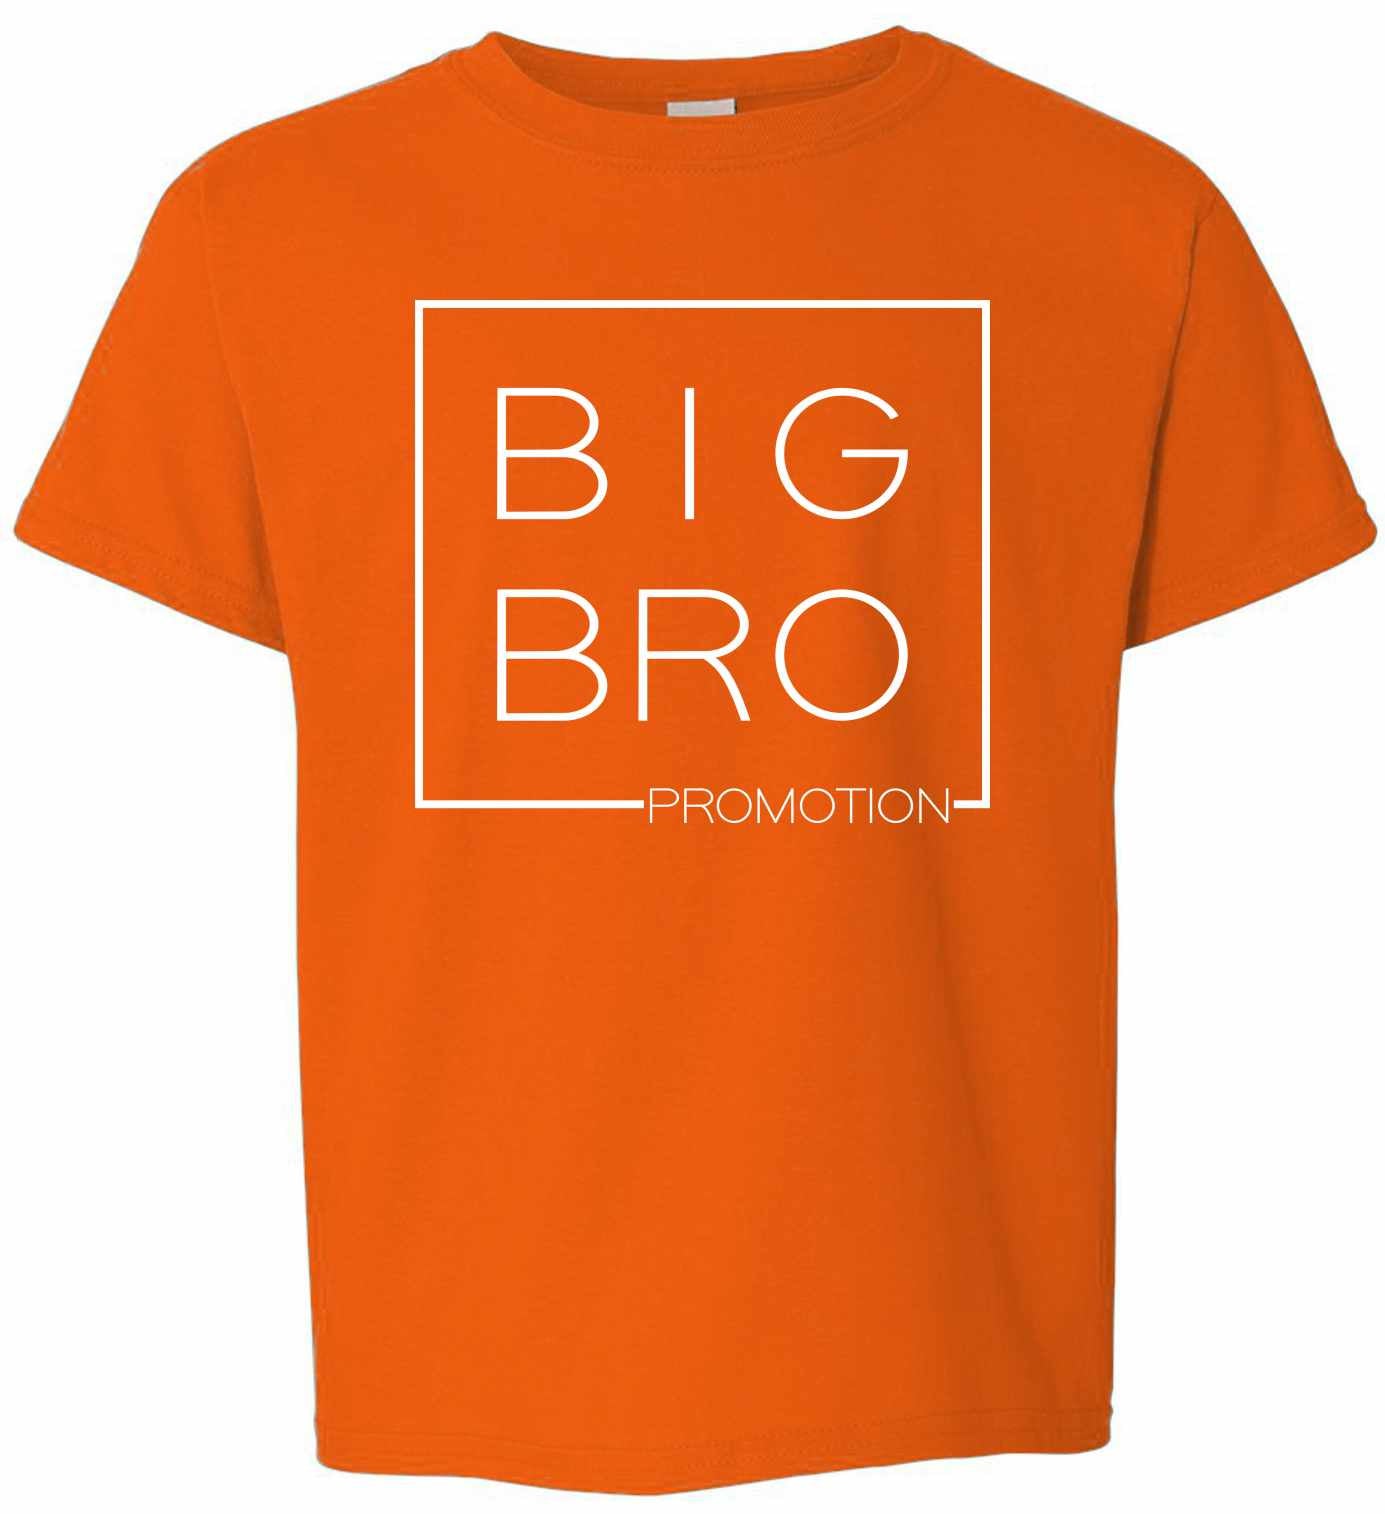 Big Bro Promotion - Big Brother - Box on Kids T-Shirt (#1330-201)